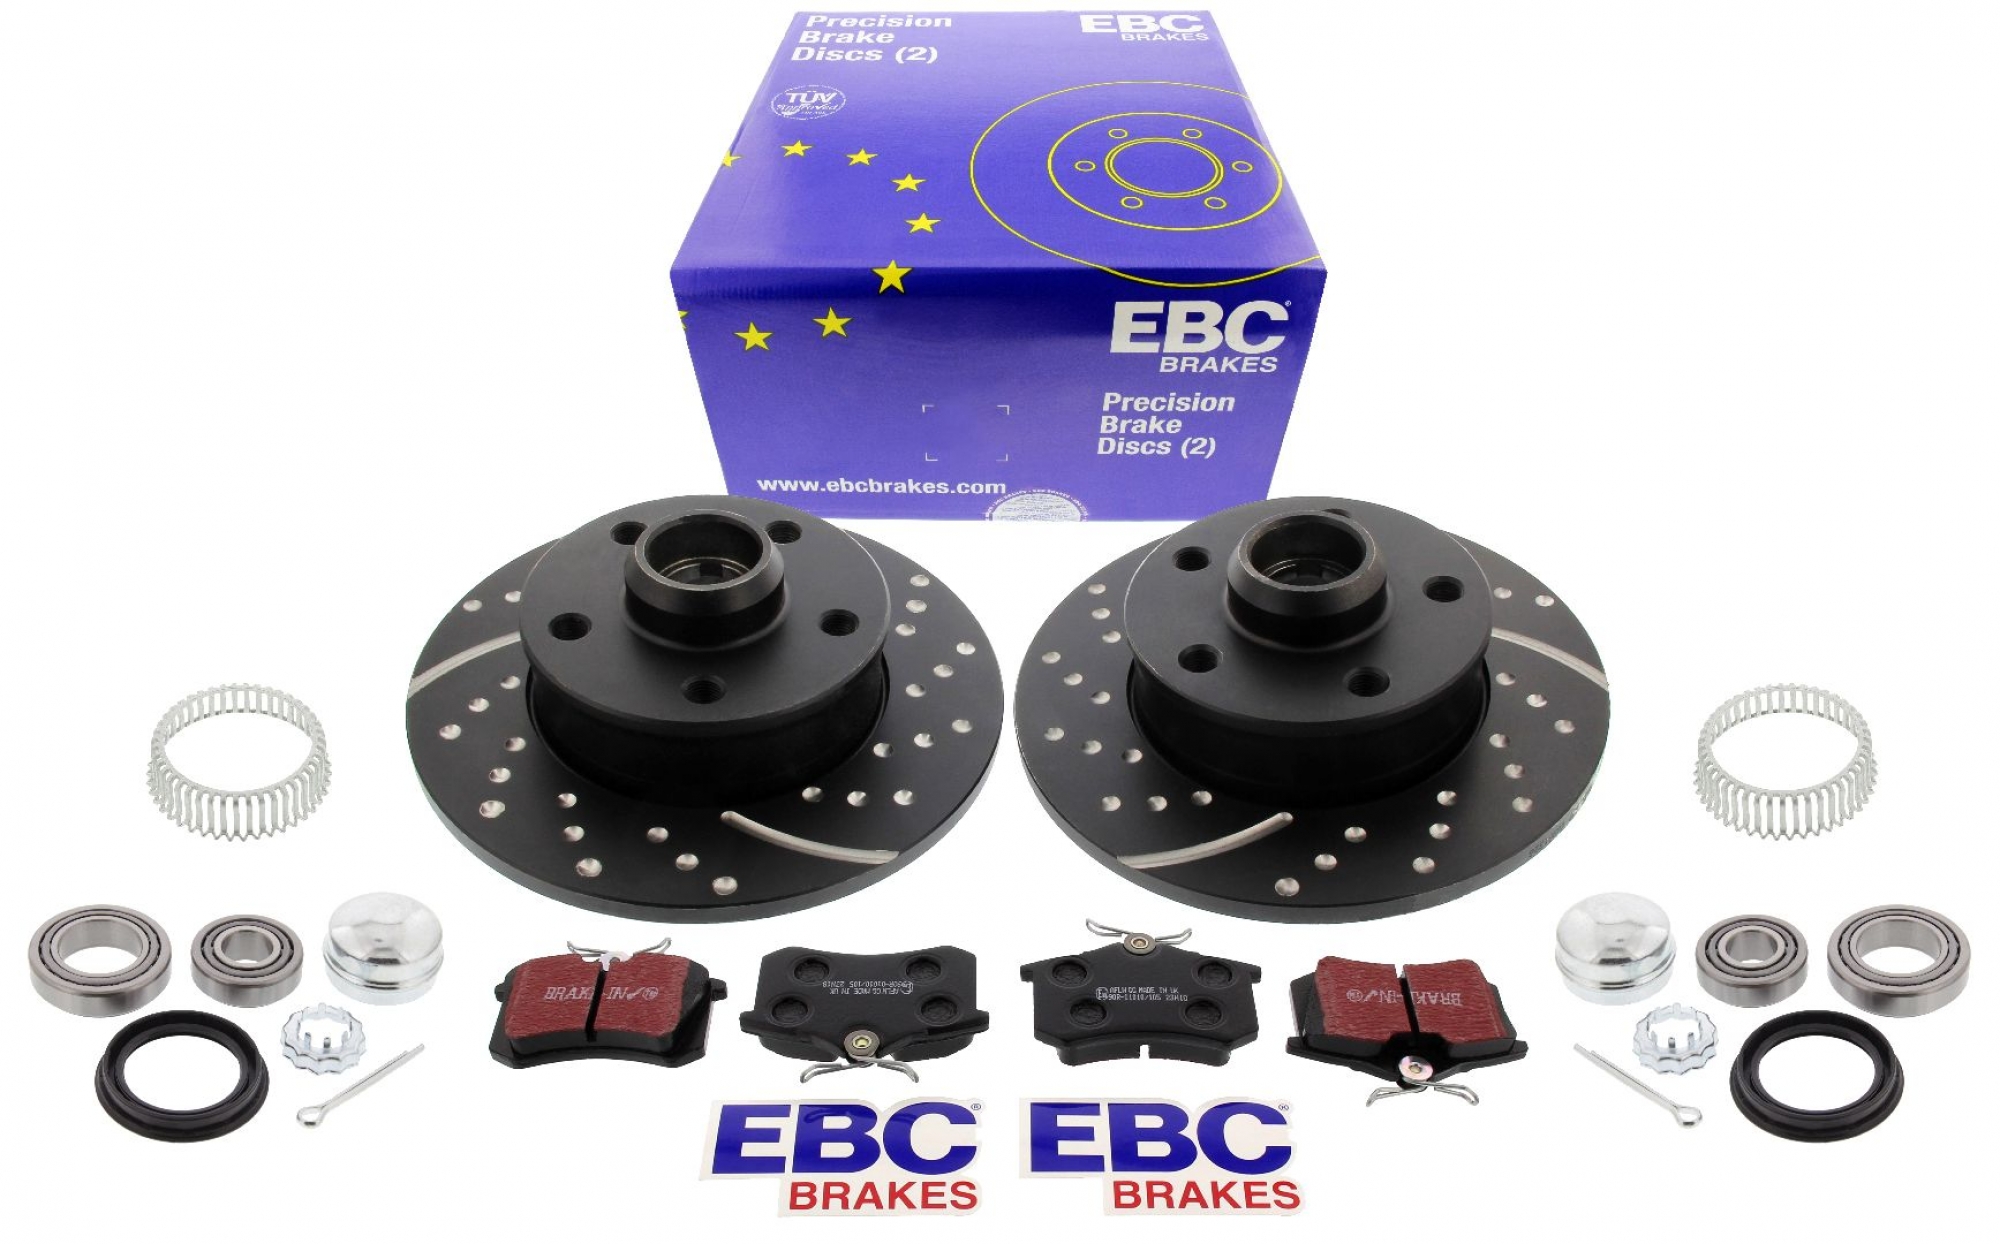 EBC-Bremsensatz, Turbo Groove Disc Black + Bremsbeläge, Blackstuff, Achssatz, HA, Seat, VW